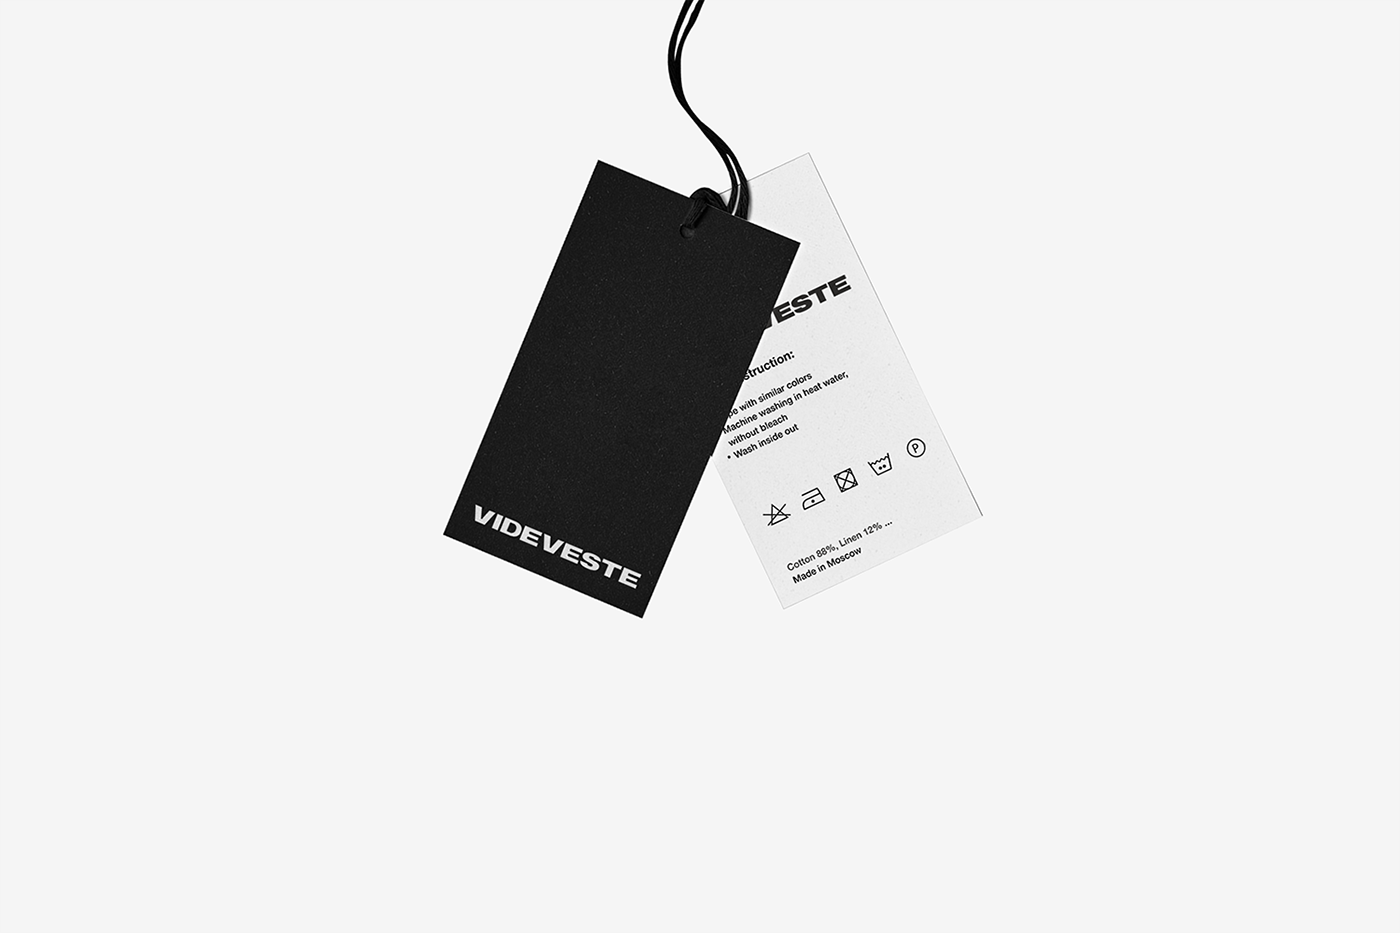 videveste Clothing Fashion  type bold radmirvolk logo blackandwhite branding  Packaging